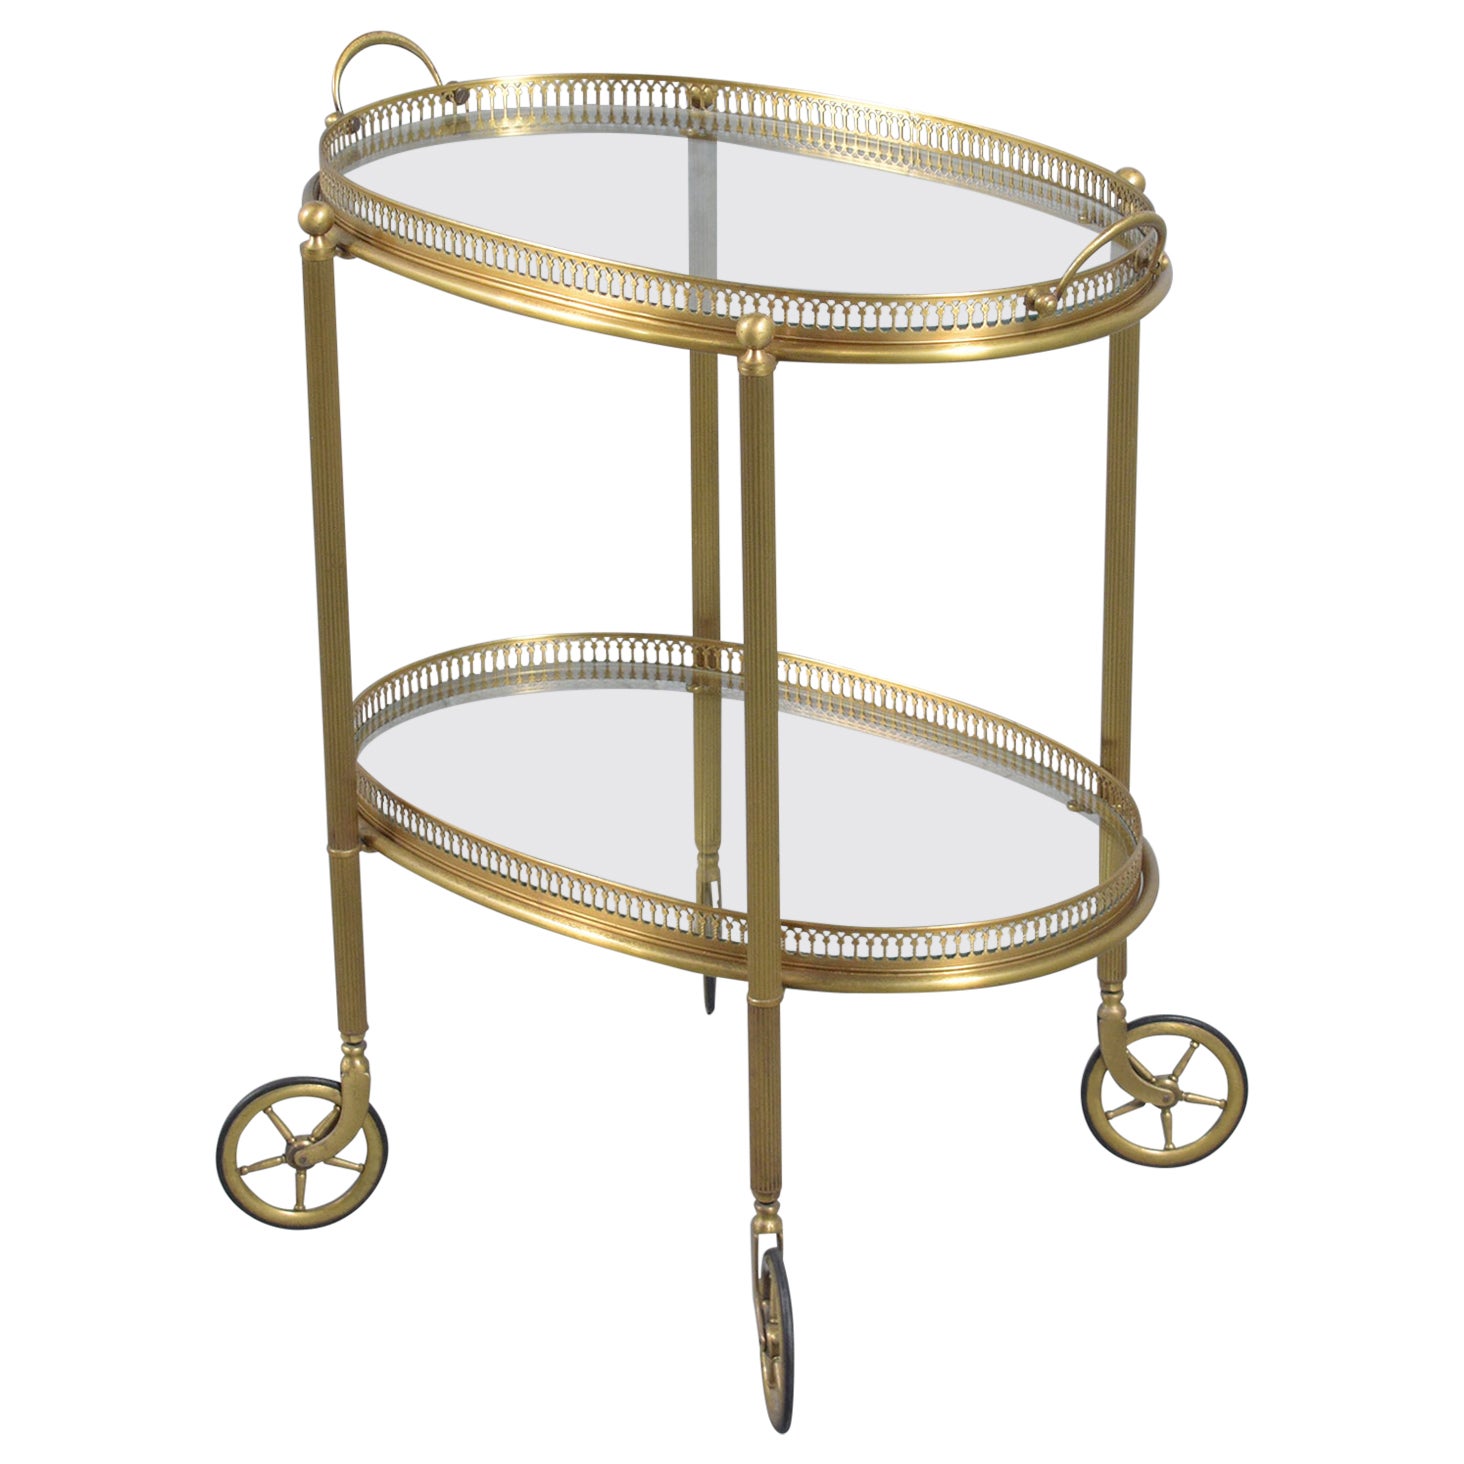 1960s Brass Bar Cart: Mid-Century Elegance Restored